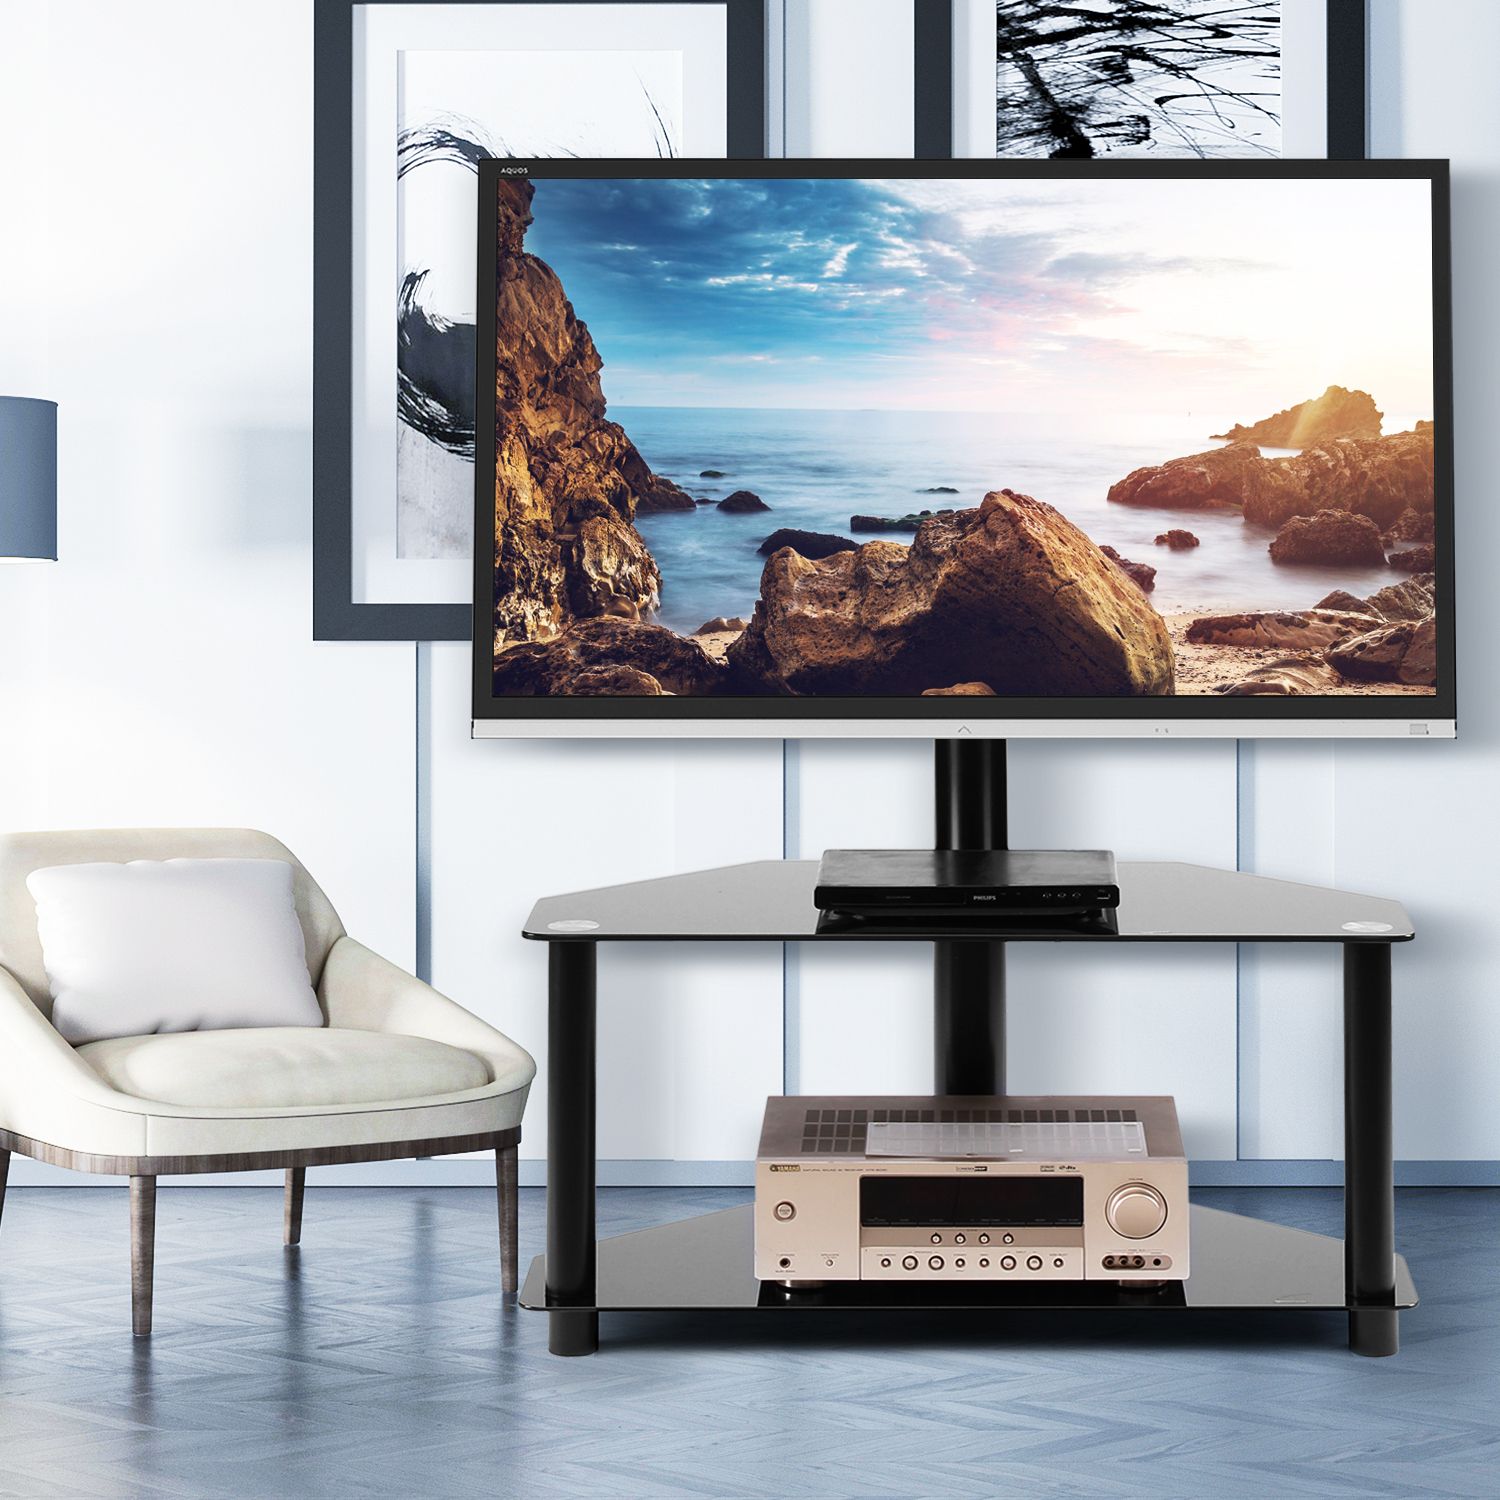 5rcom 2 Shelf Corner Floor Tv Stand With Swivel Mount For With Regard To Swivel Floor Tv Stands Height Adjustable (Photo 13 of 15)